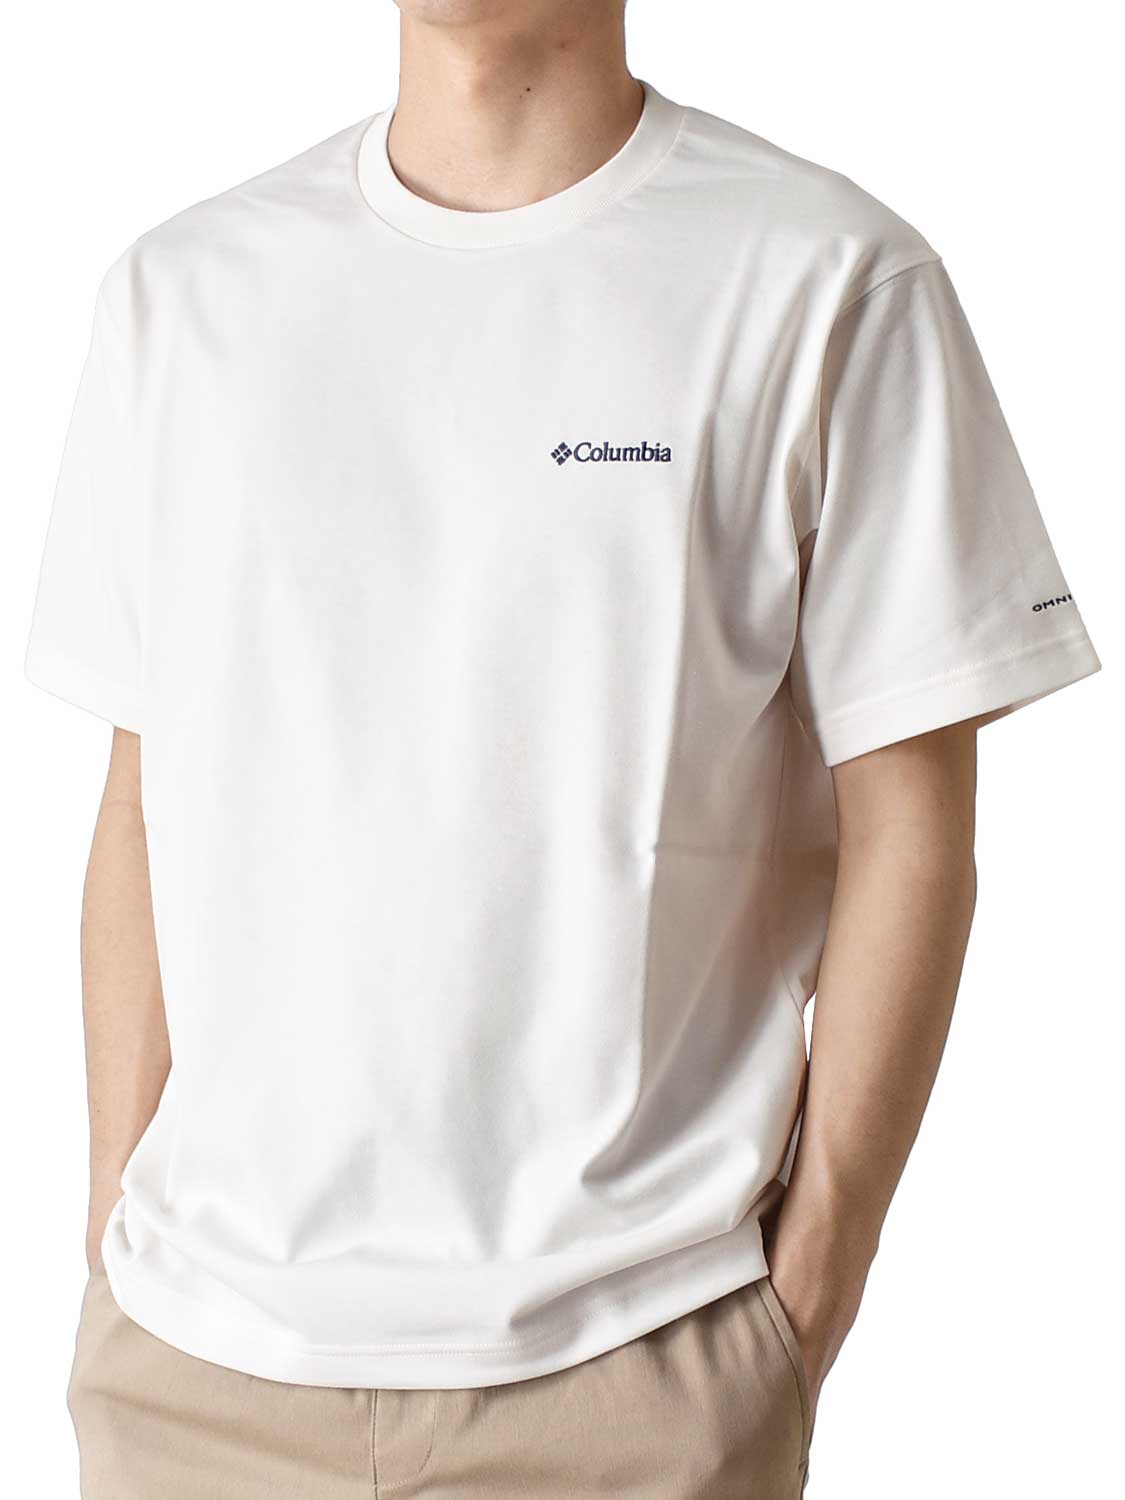 Columbia Tシャツ メンズ DRY 吸汗速乾 UVカット 送料無料 通販Y コロンビア 半袖